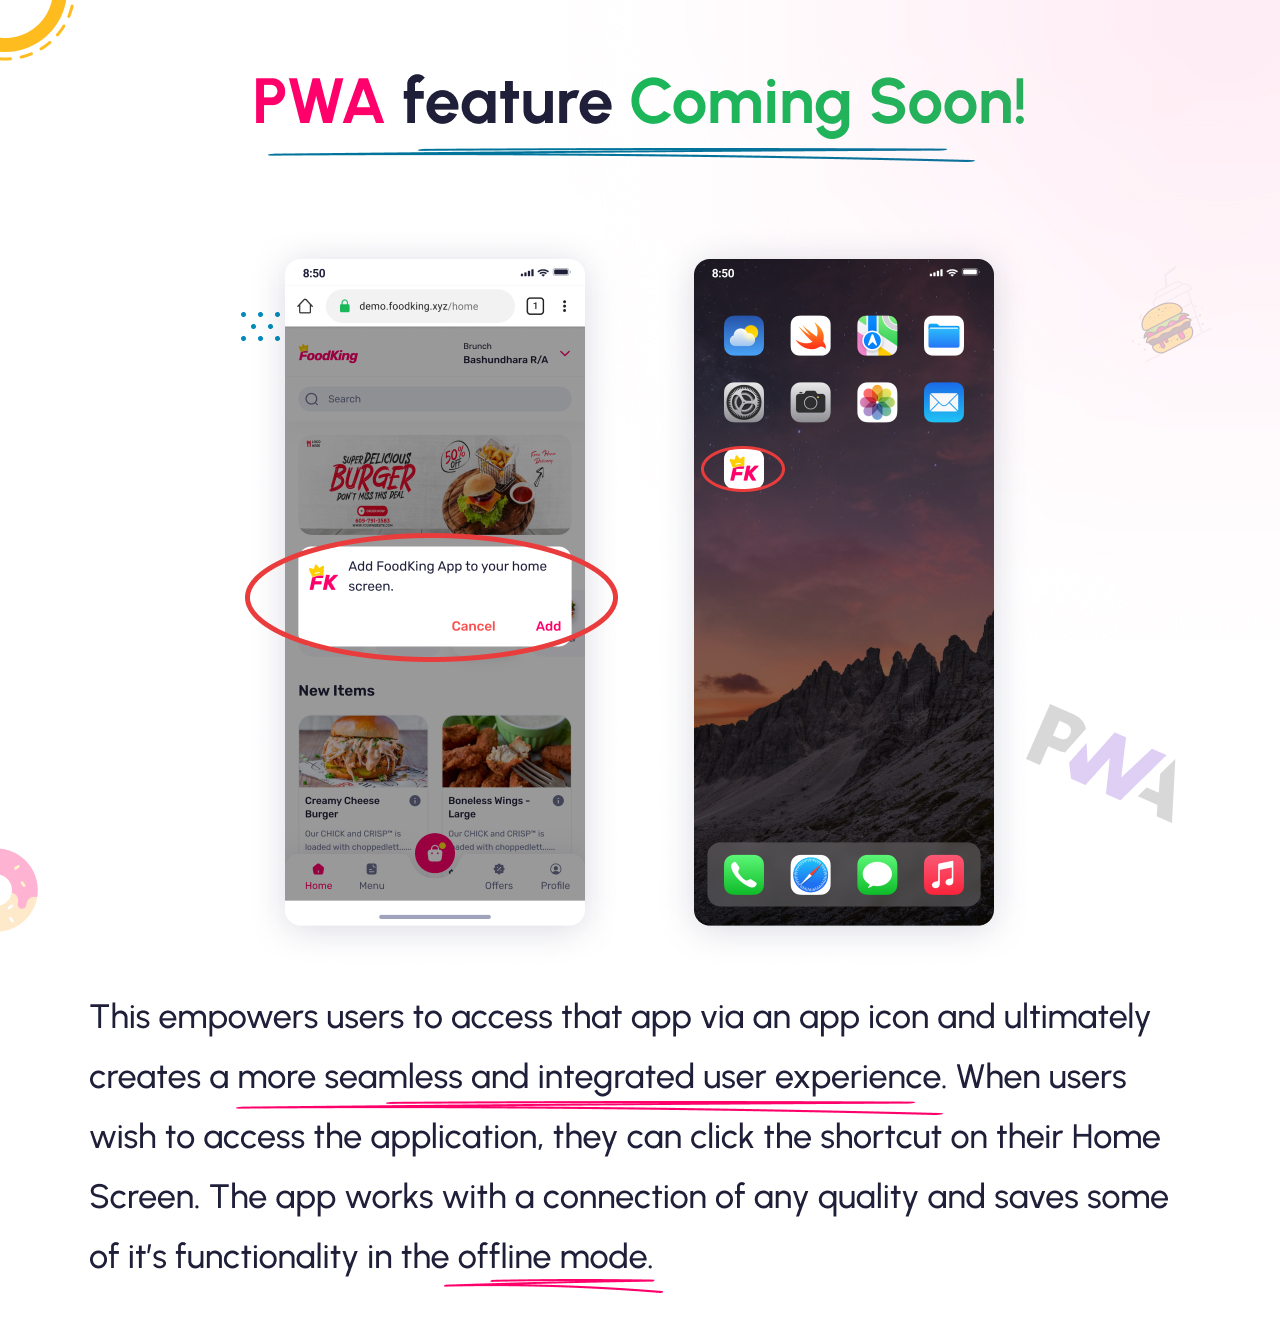 PWA feature coming soon, progressive web app